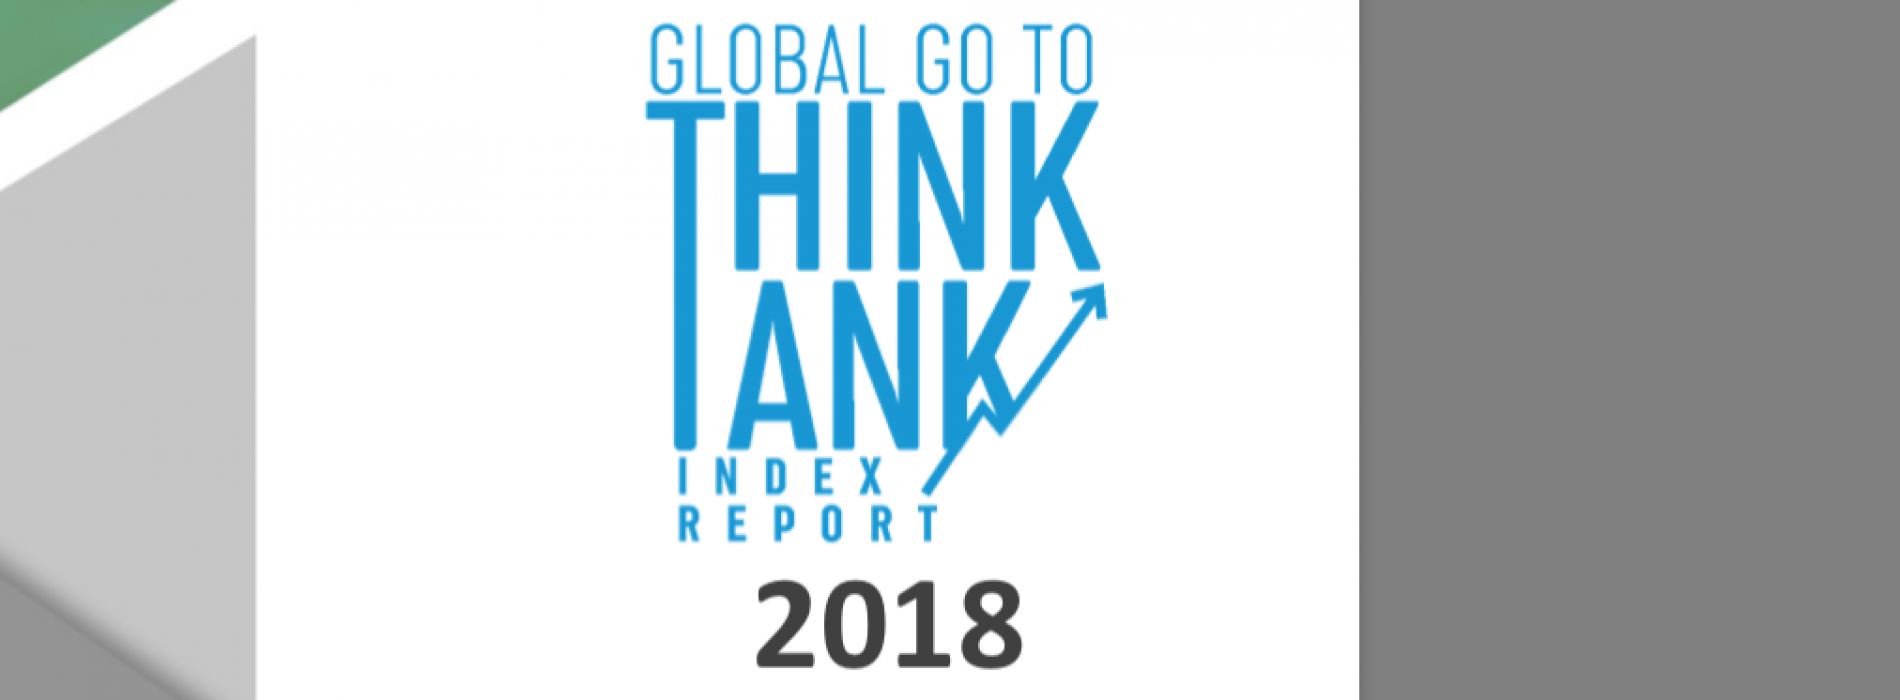 Puesto 18 en el Global Think Tanks Index